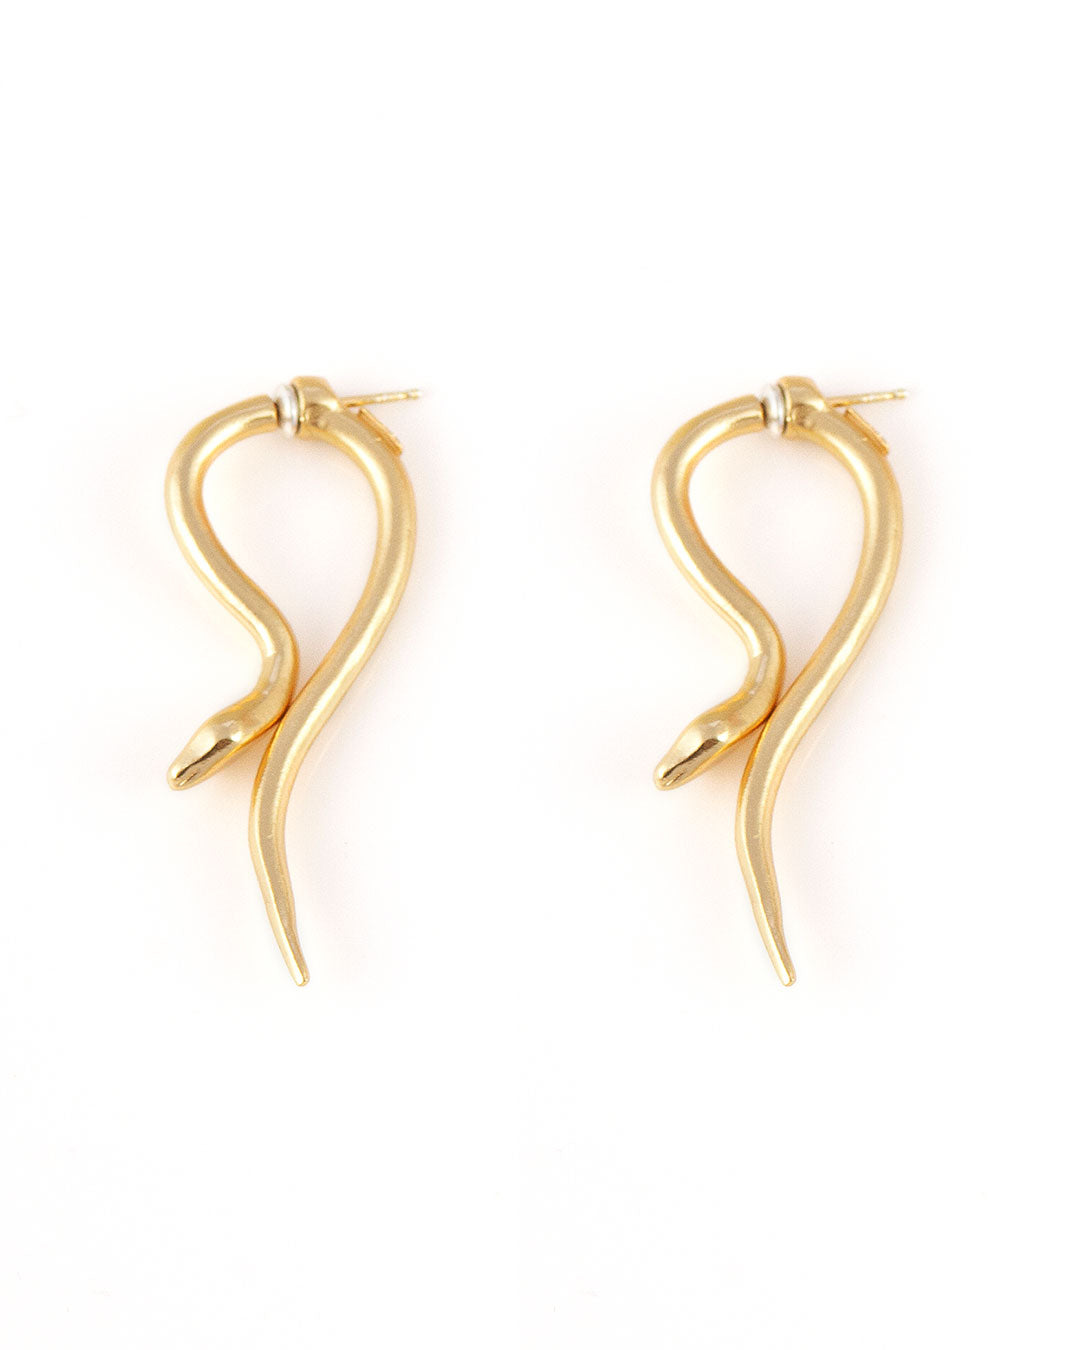 Hooked Earrings 24k gold plated bronze Giulia Barela Jewelry